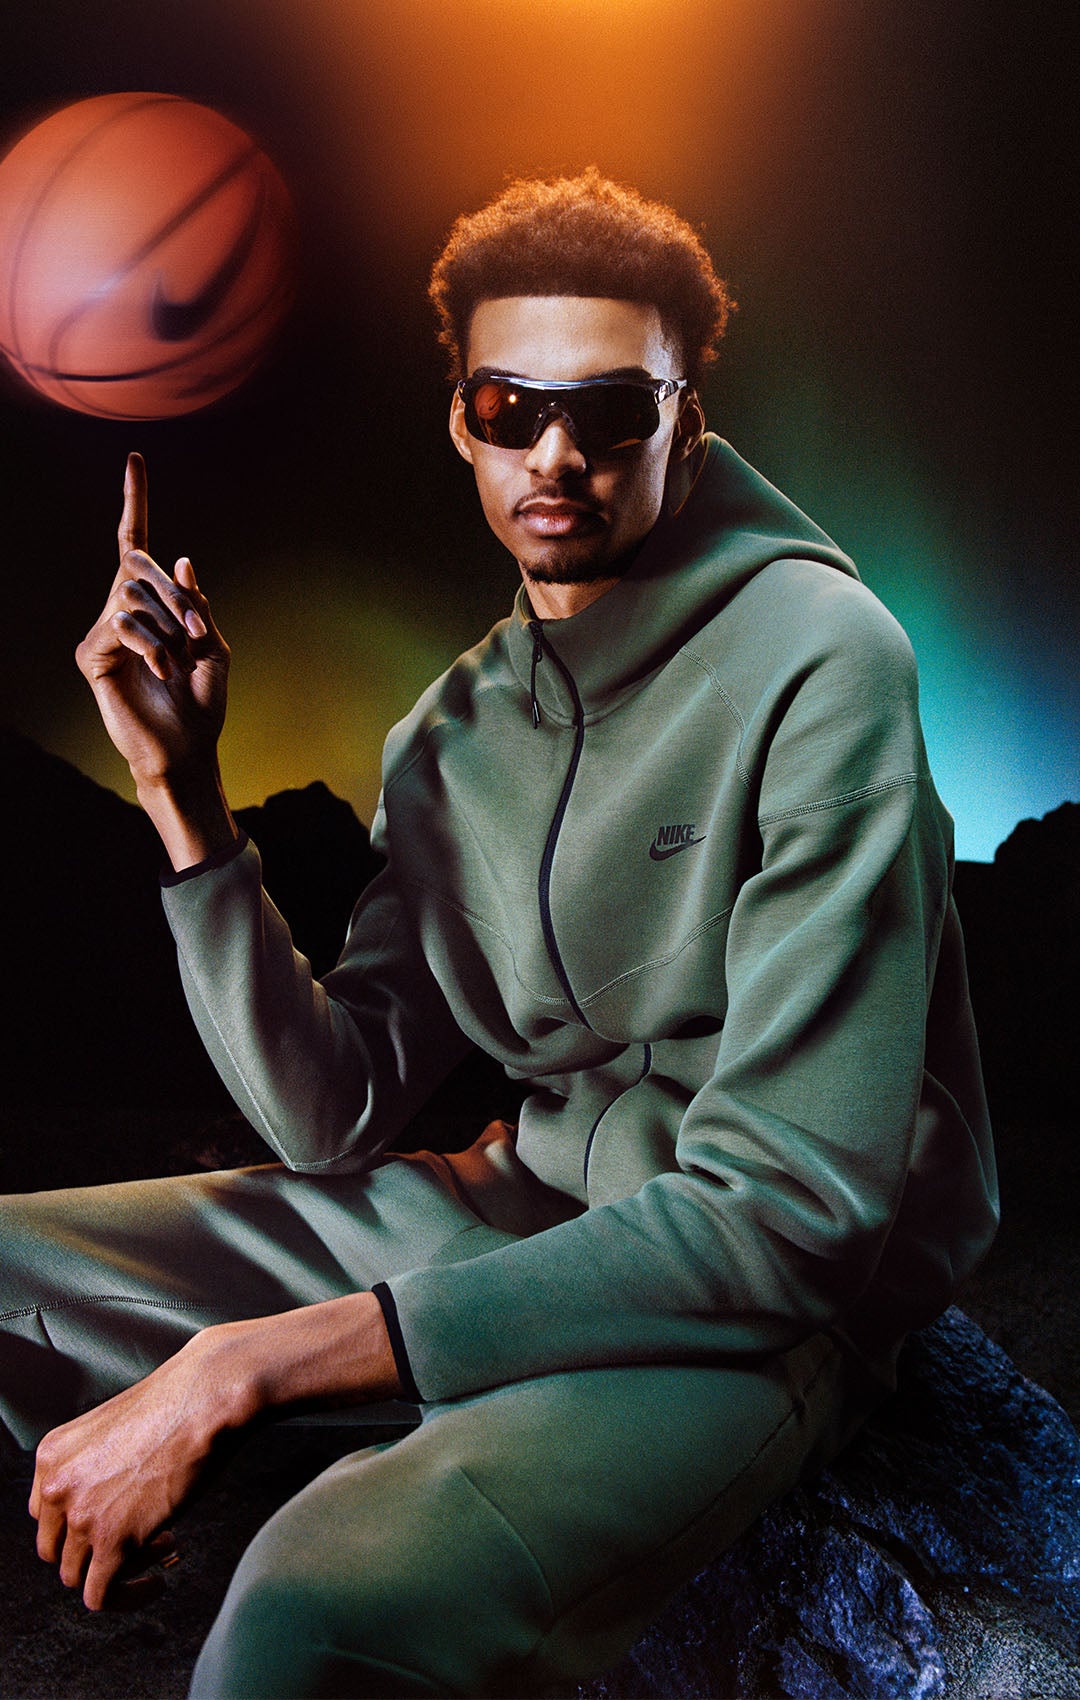 Basketball Clothing. Nike IN